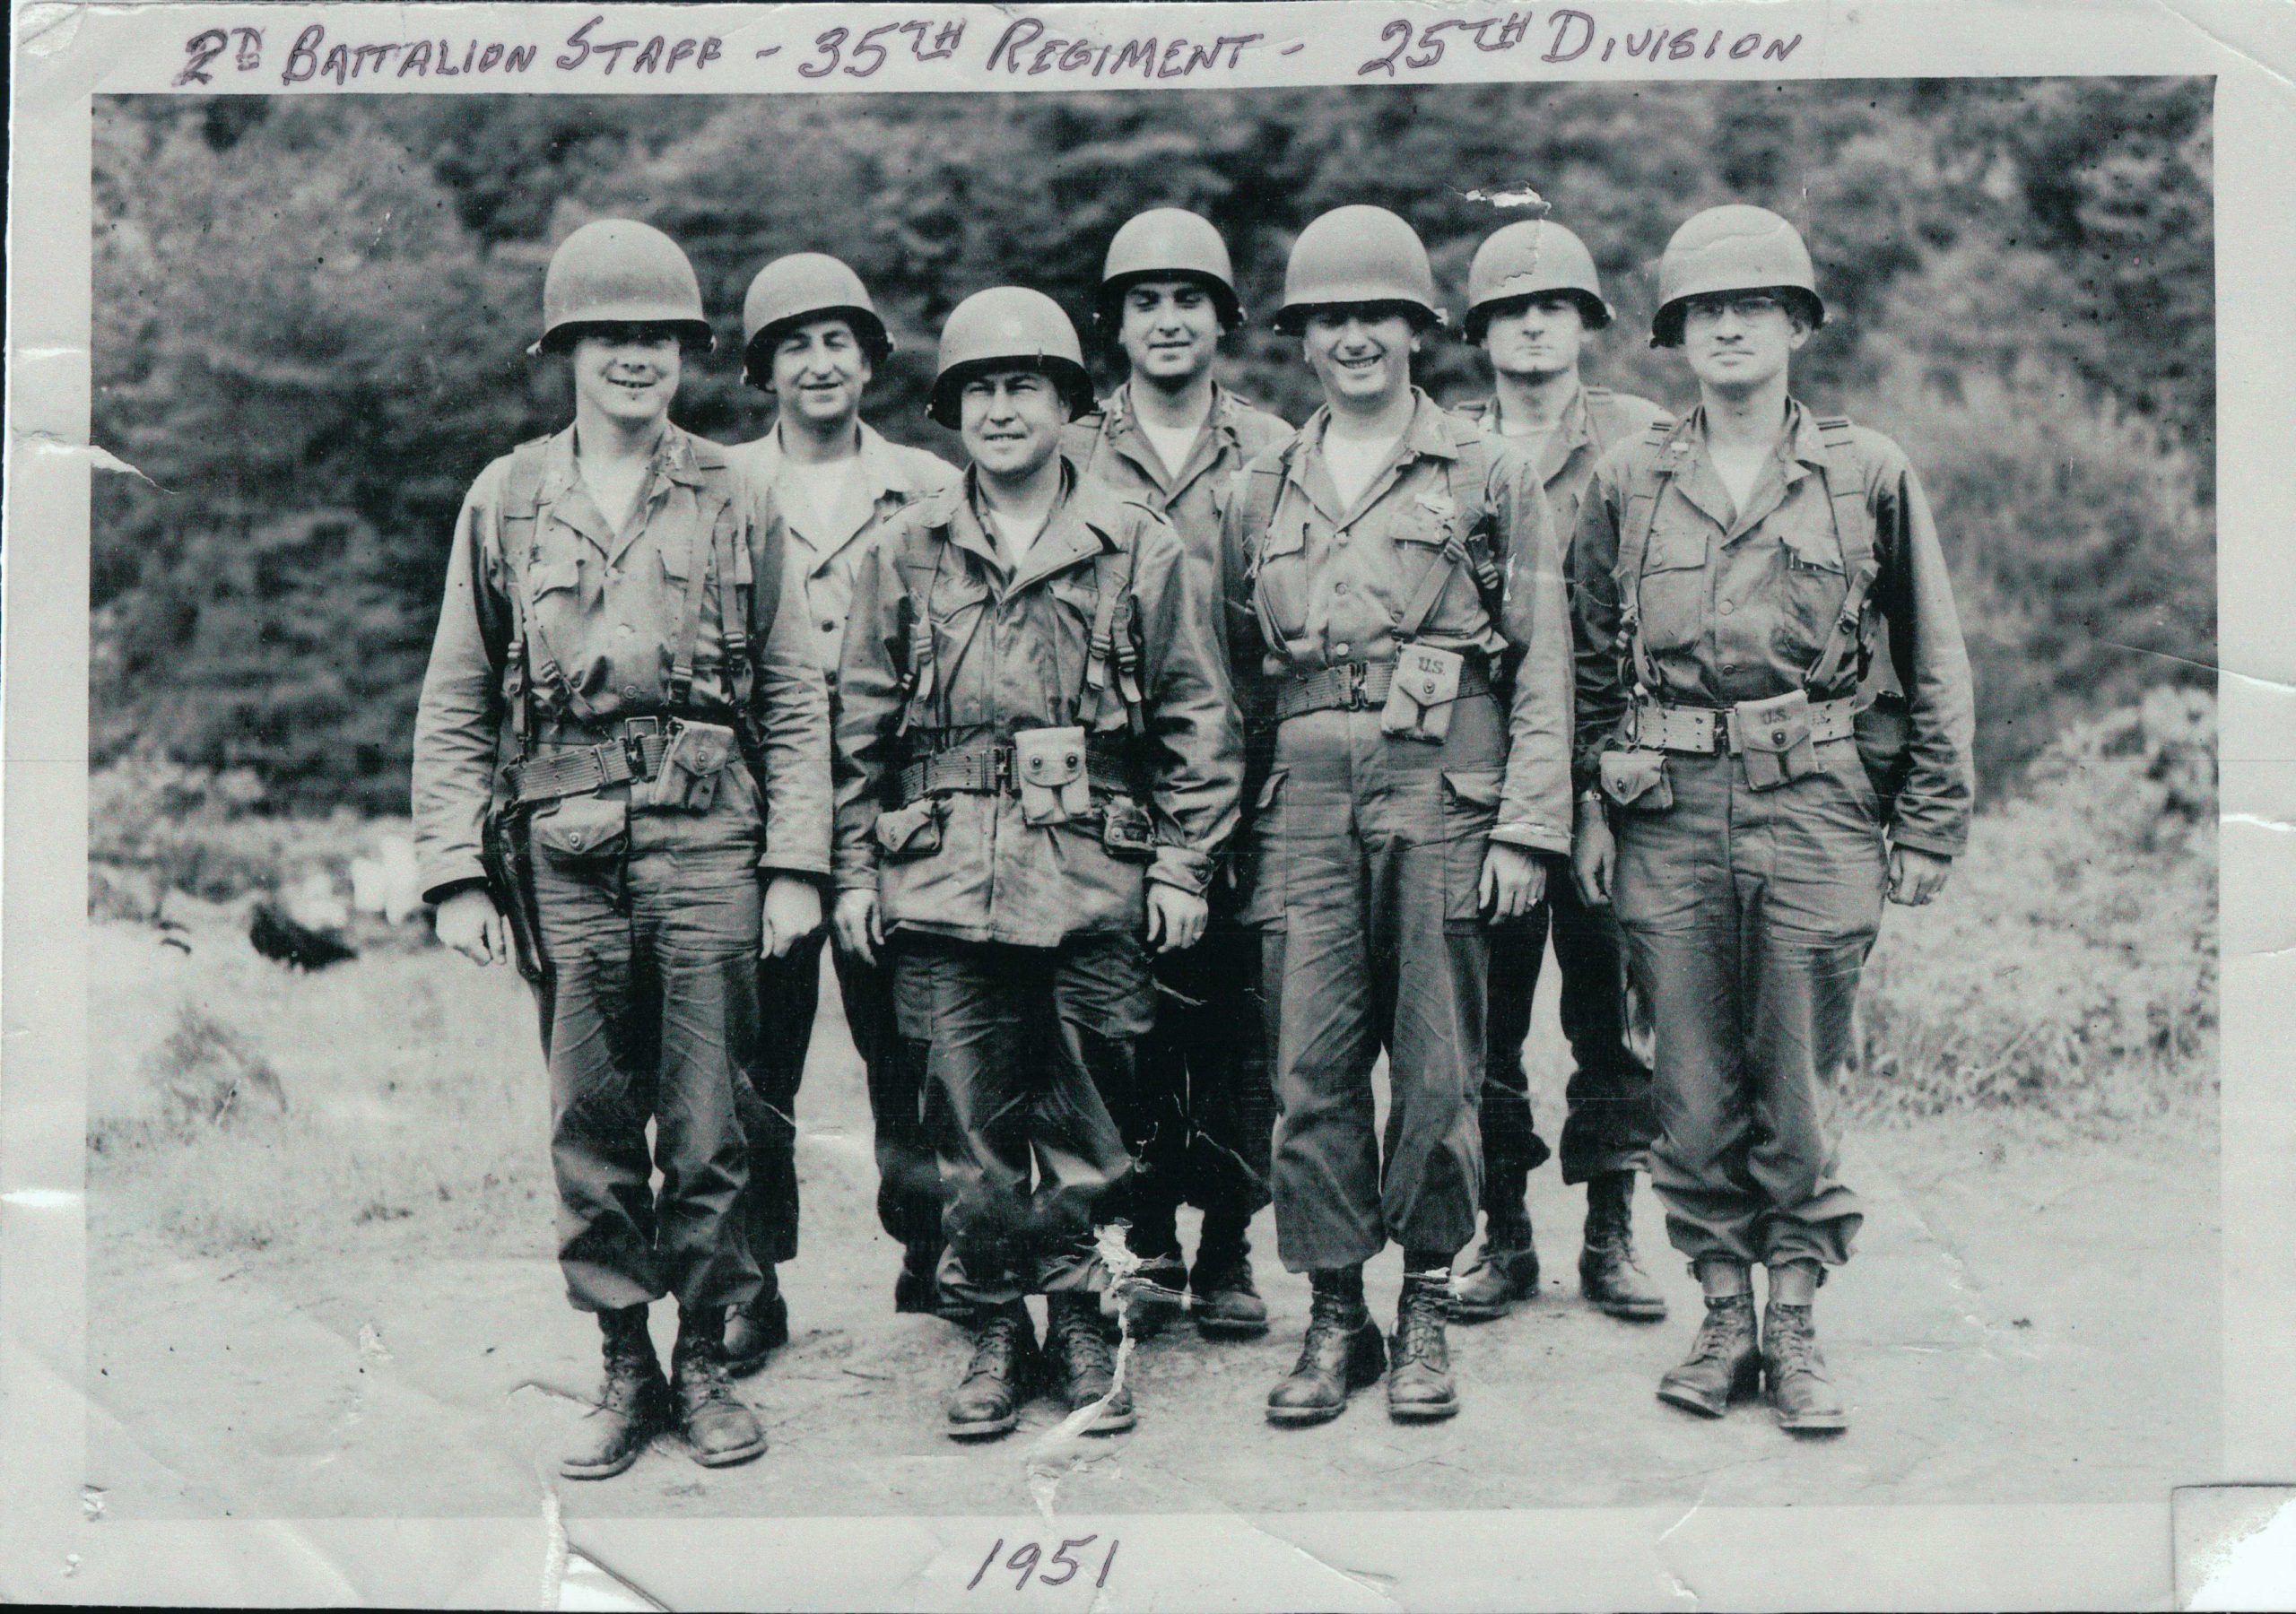 2nd Battalion Staff, 35th Regiment, 25th Division